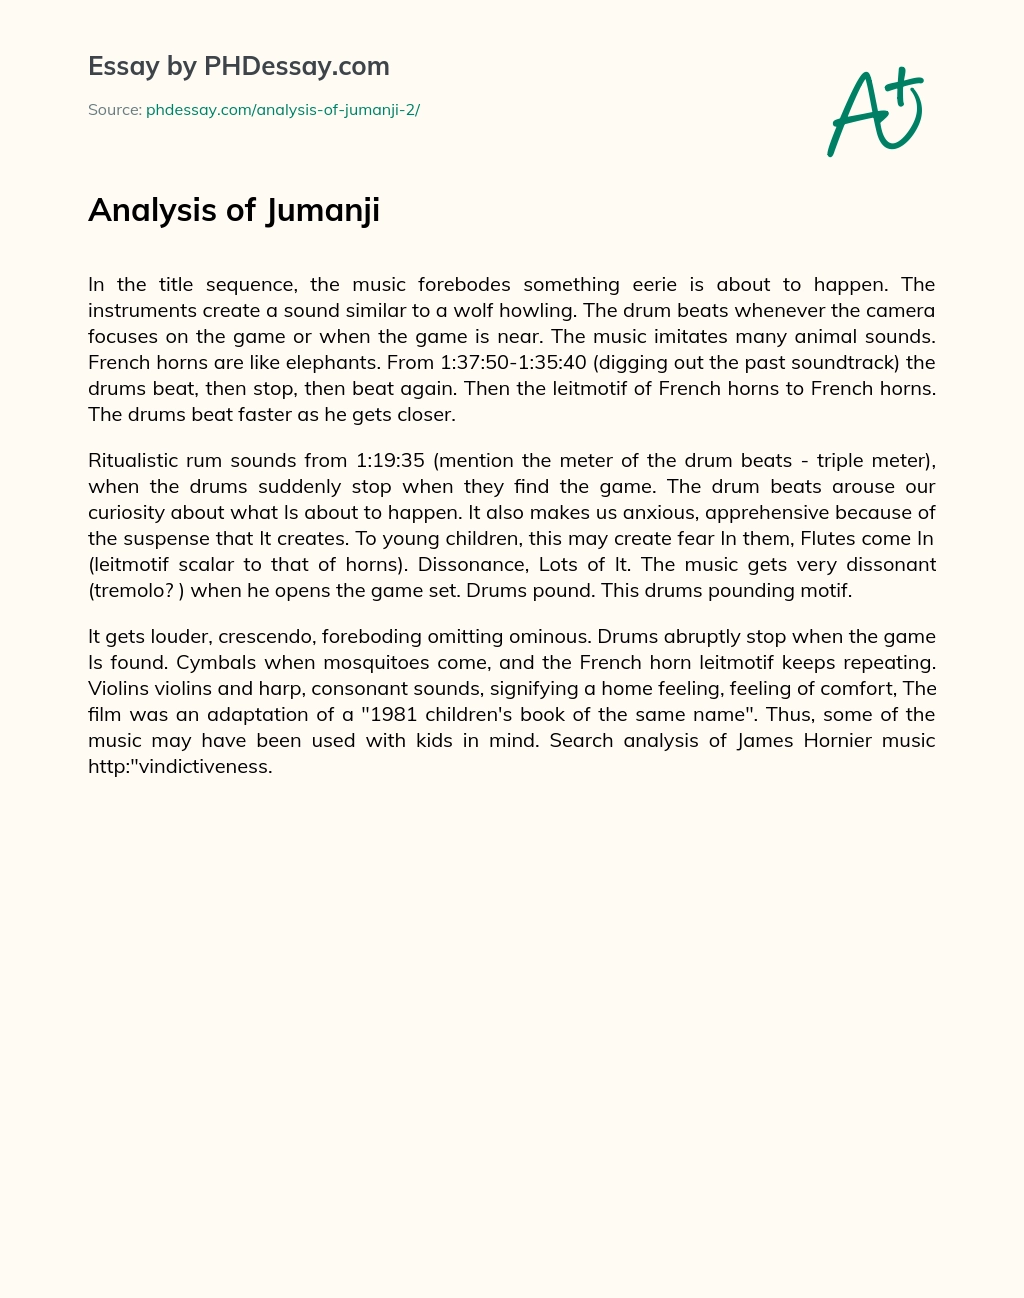 Analysis of Jumanji essay